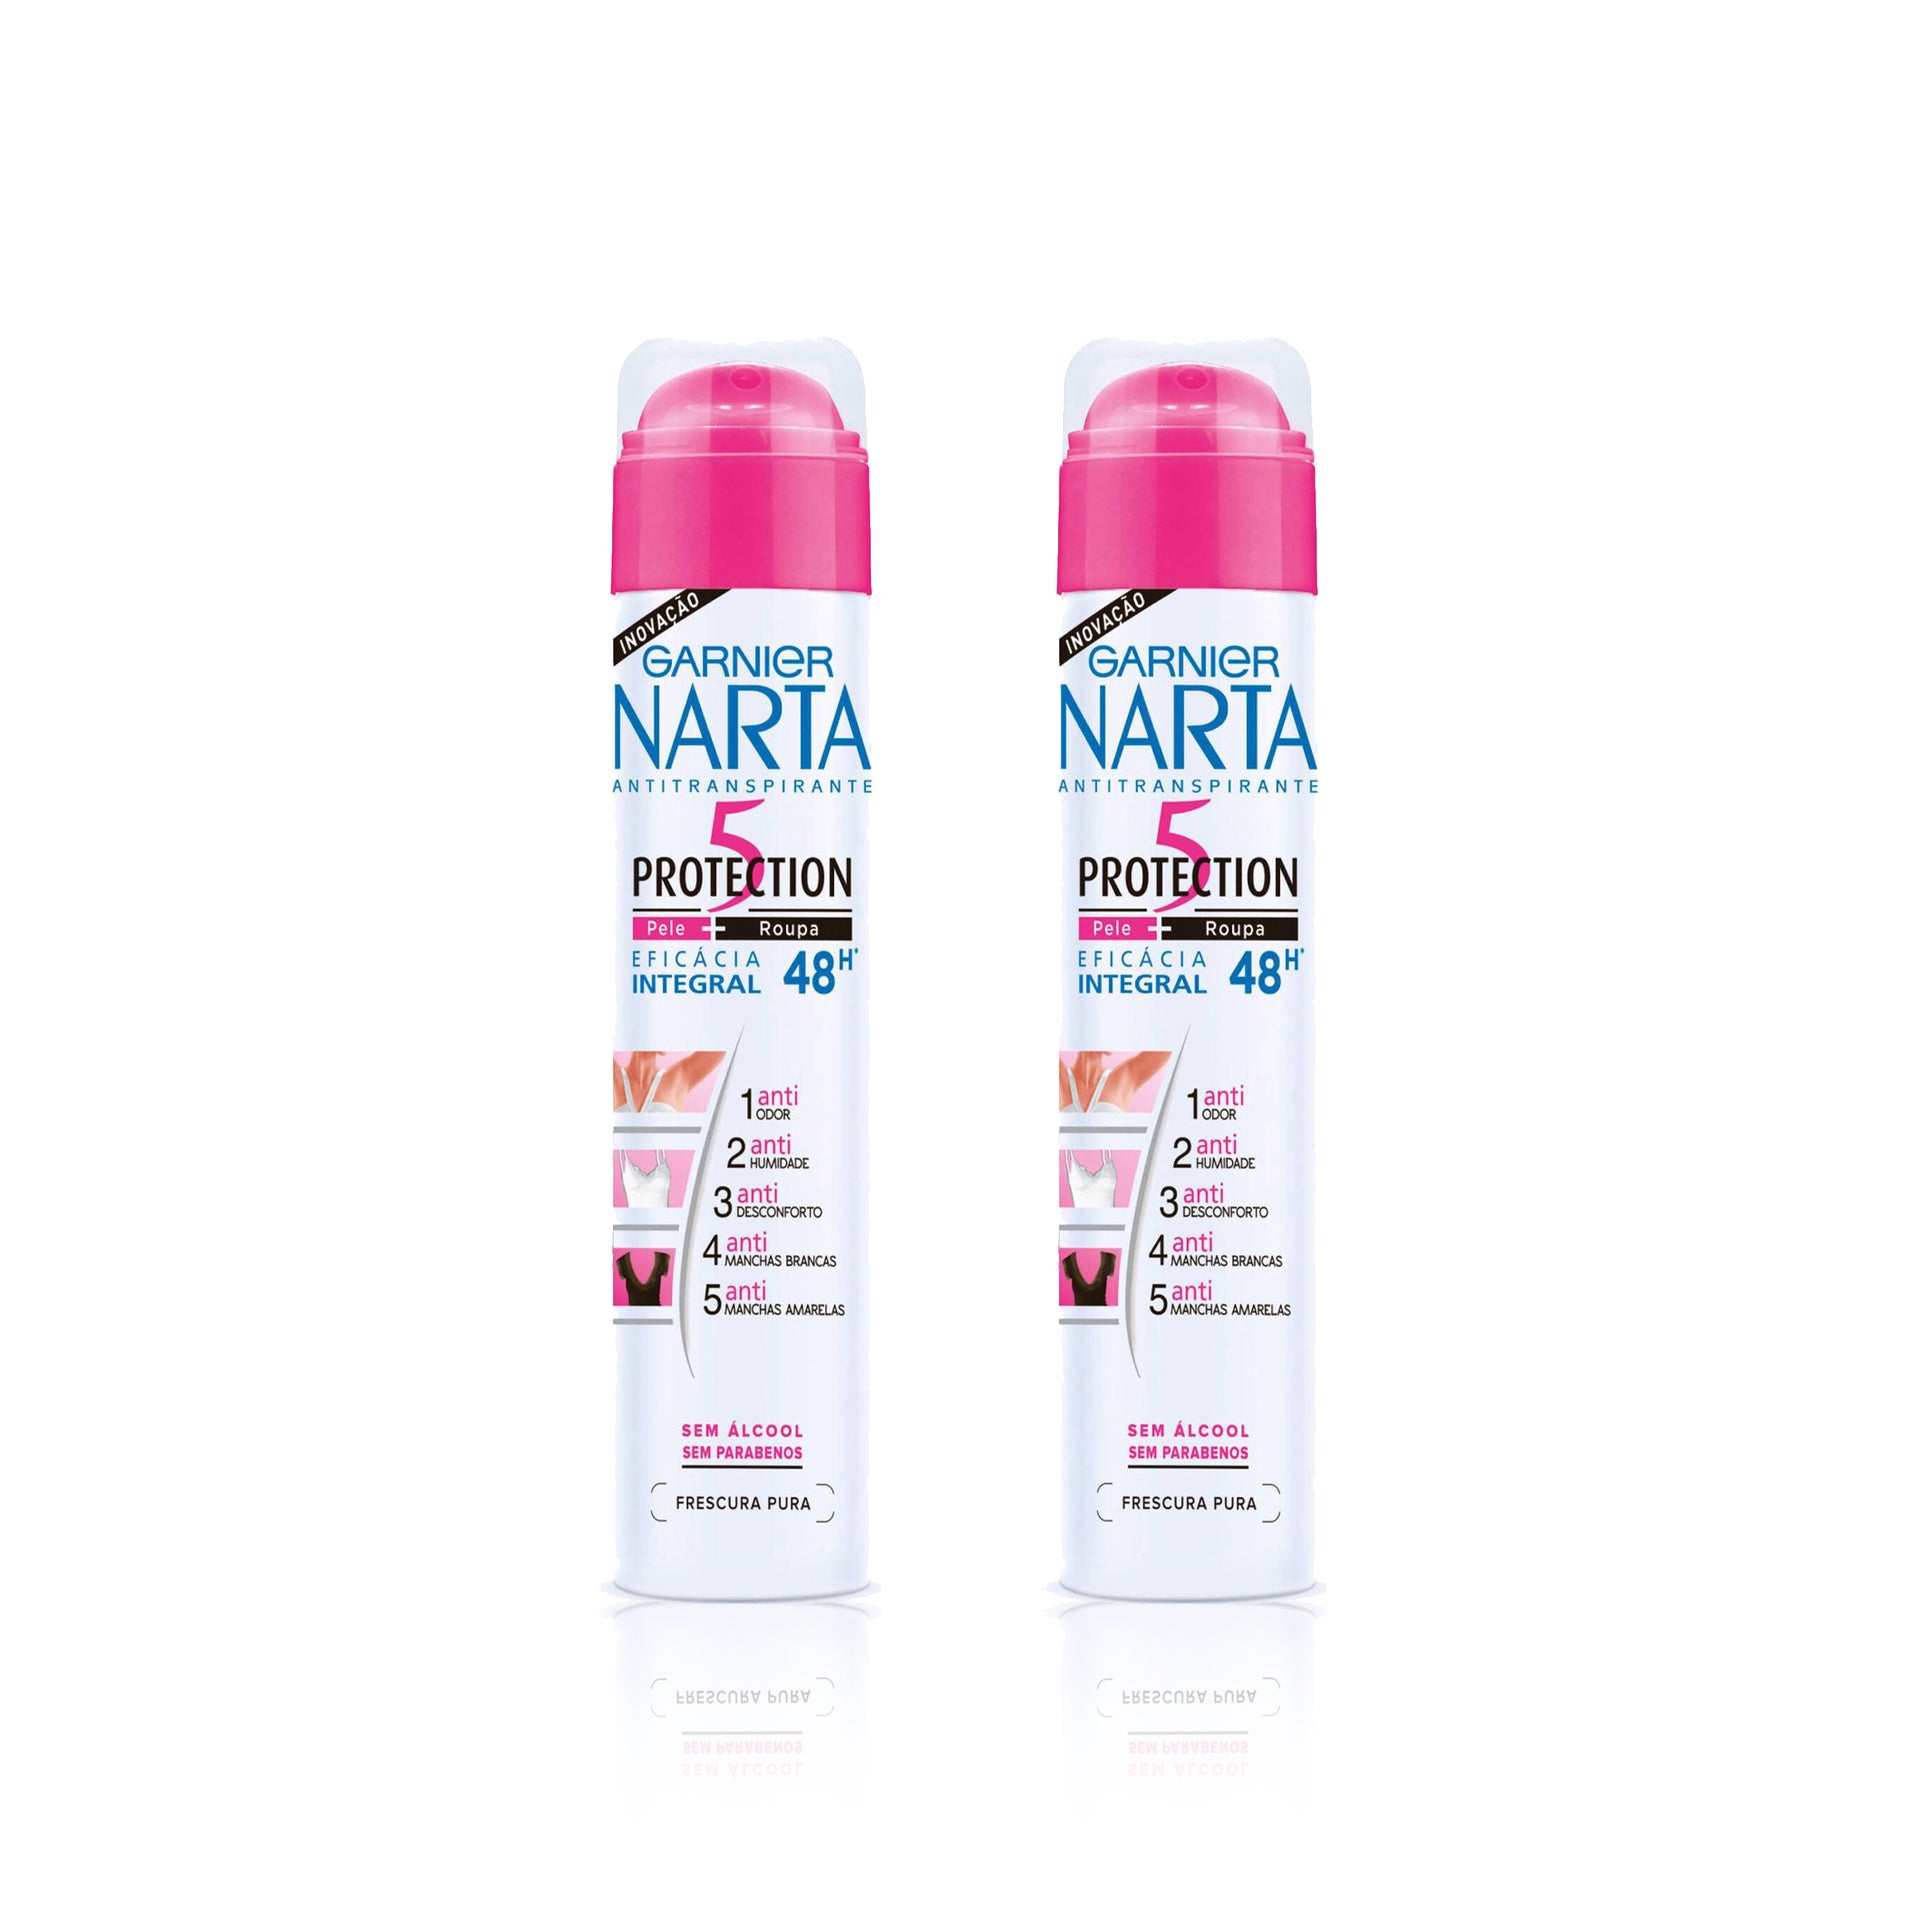 Garnier Narta Desodorizante Spray Protection 5 200 ml - Pack 2 x 200 ml